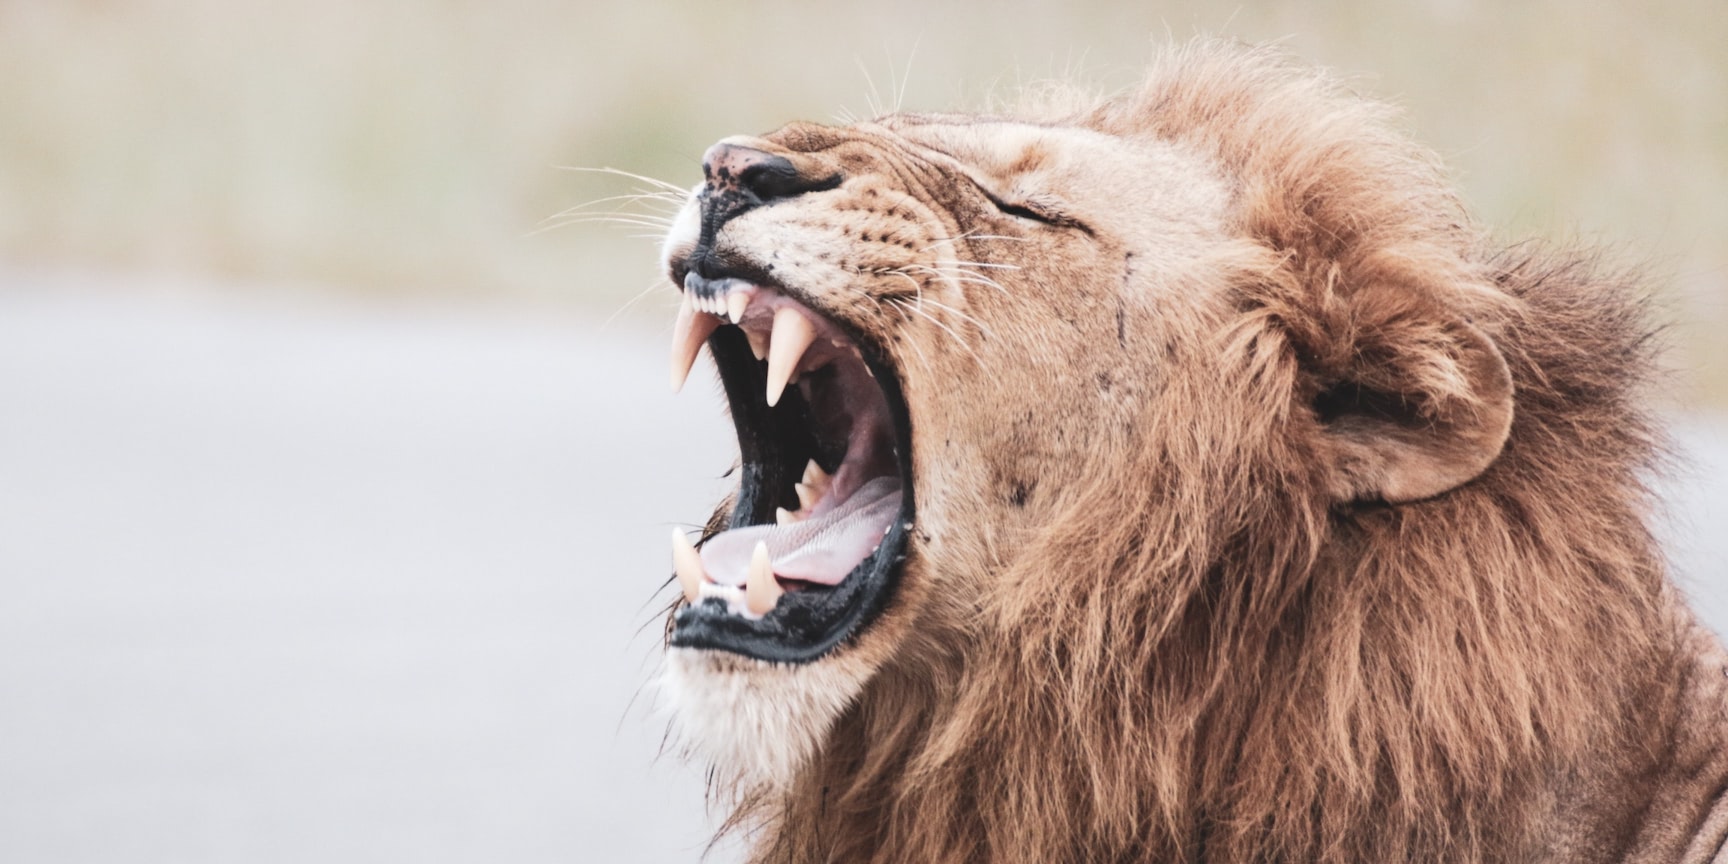 Lion spirit animal : Symbolism and meaning